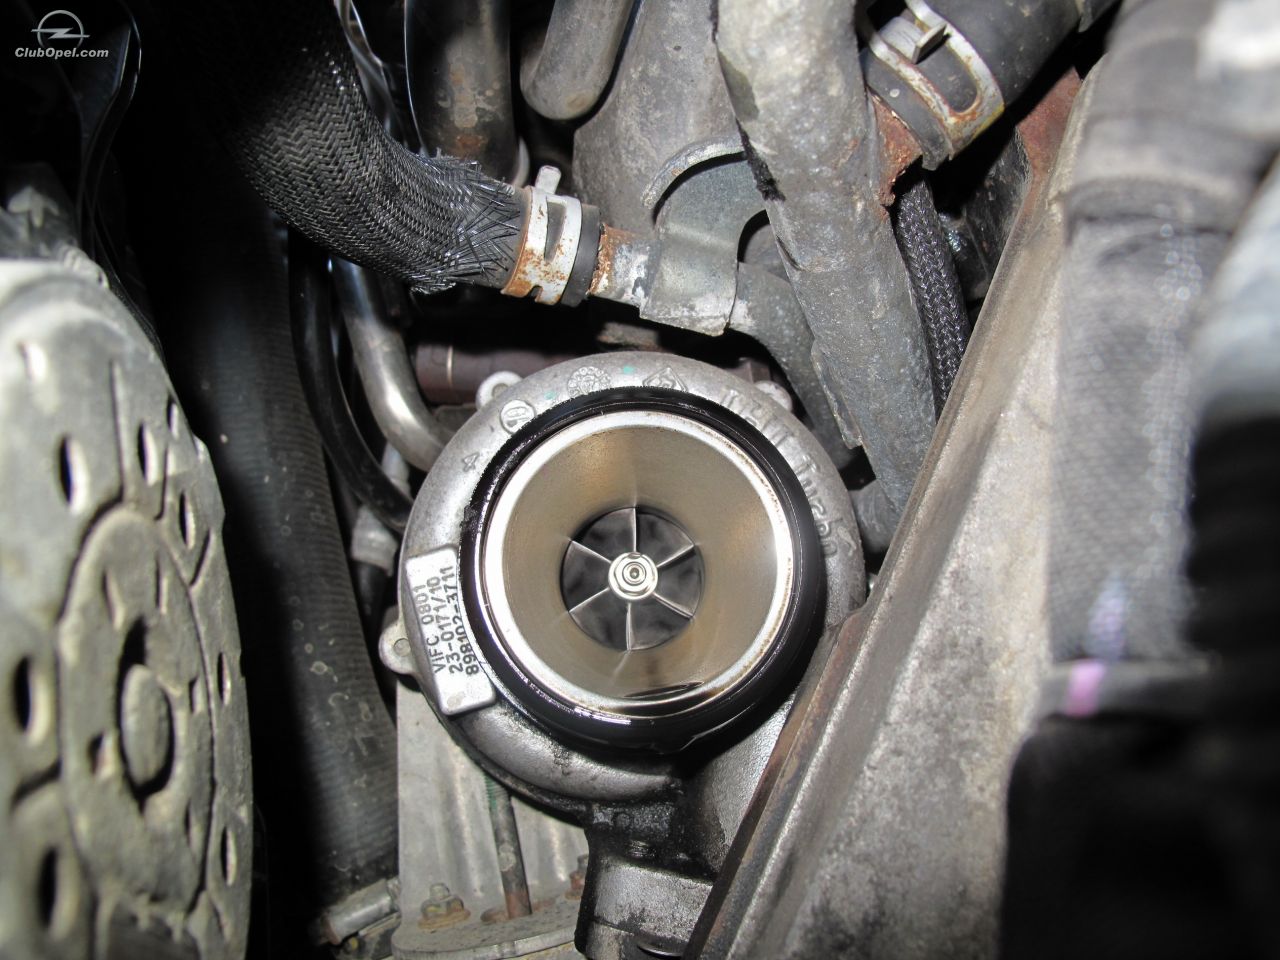 Probleme Turbo Opel Astra H 1 7 Cdti Probleme turbo opel astra h 1.7 cdti